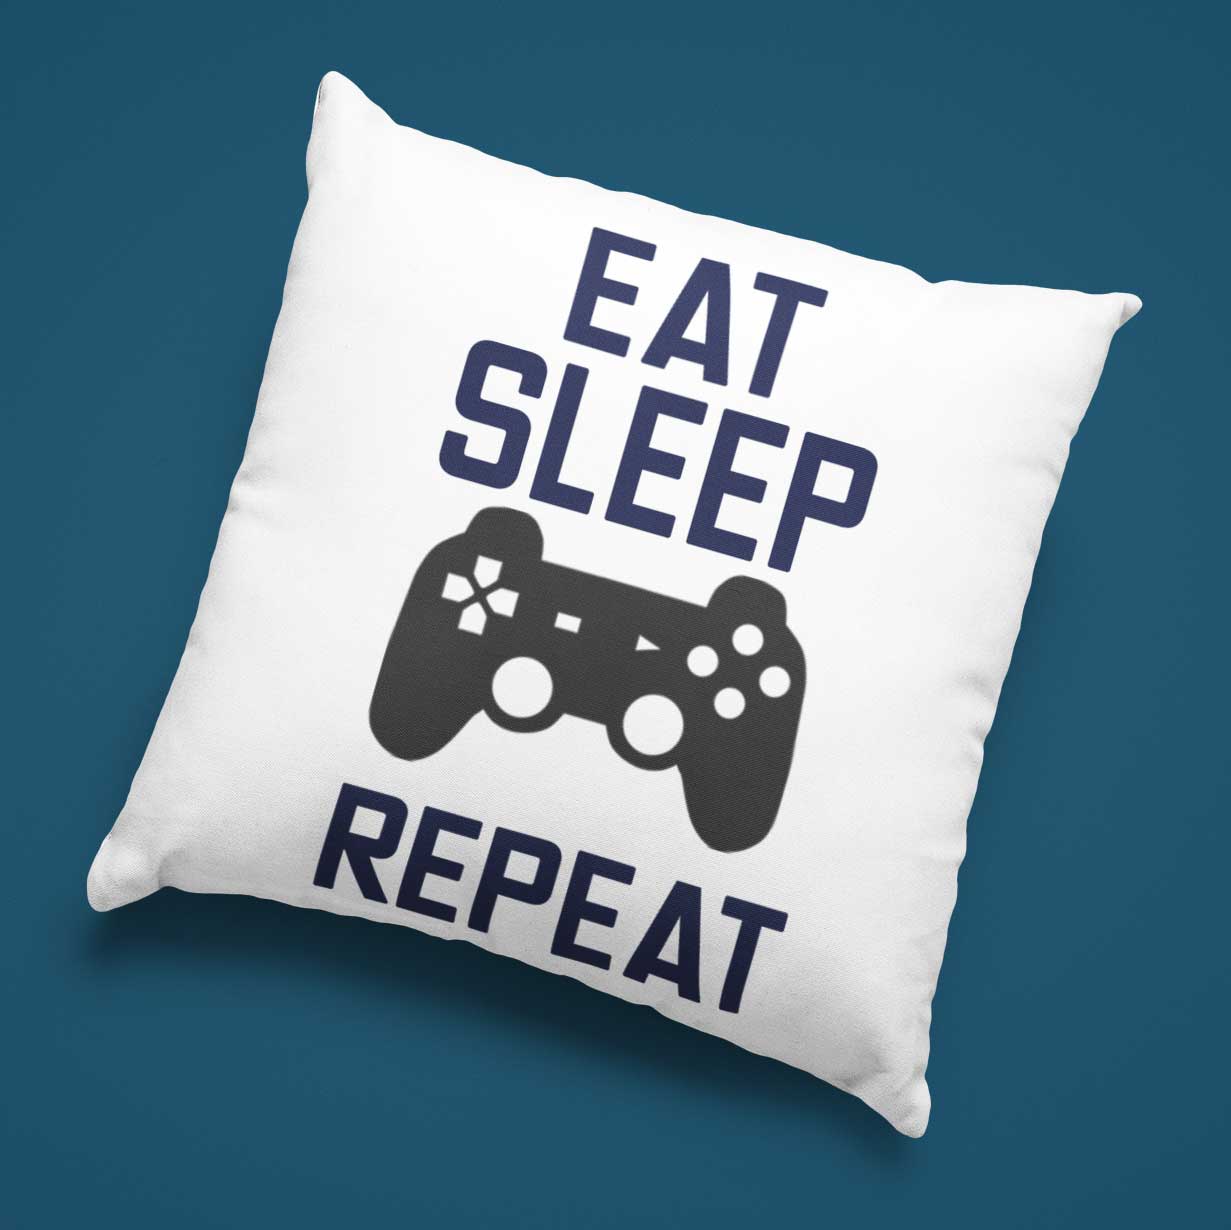 Eat Sleep Game Repeat Cushion